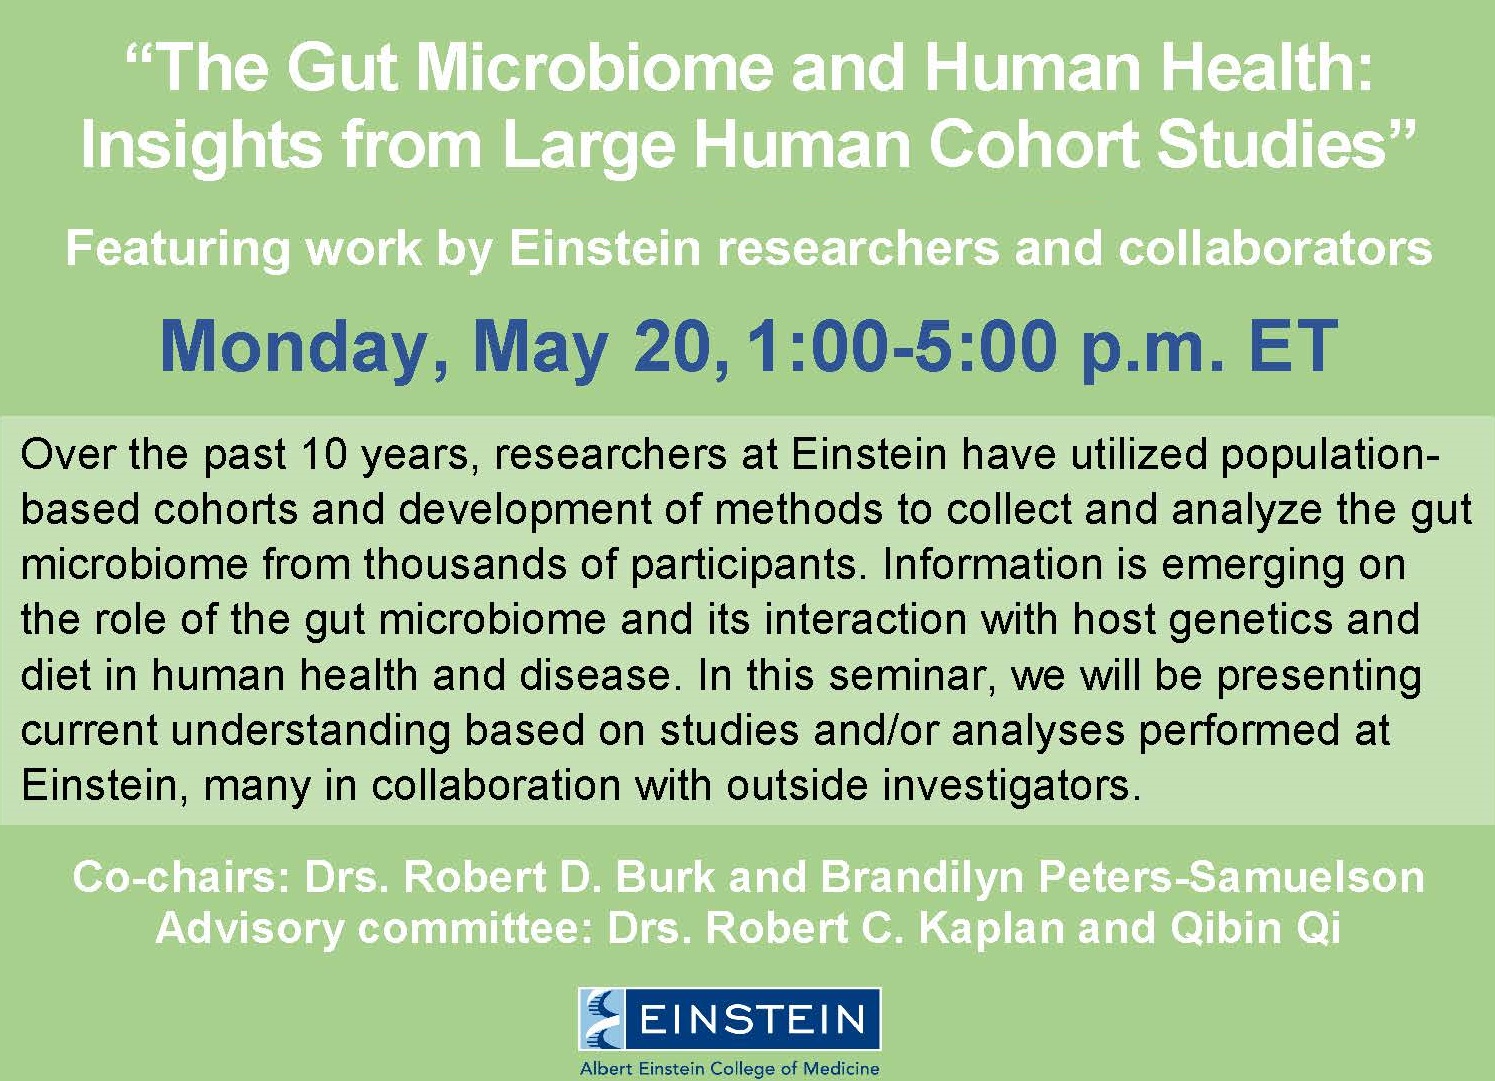 Microbiome Symposium with HCHS/SOL Investigators